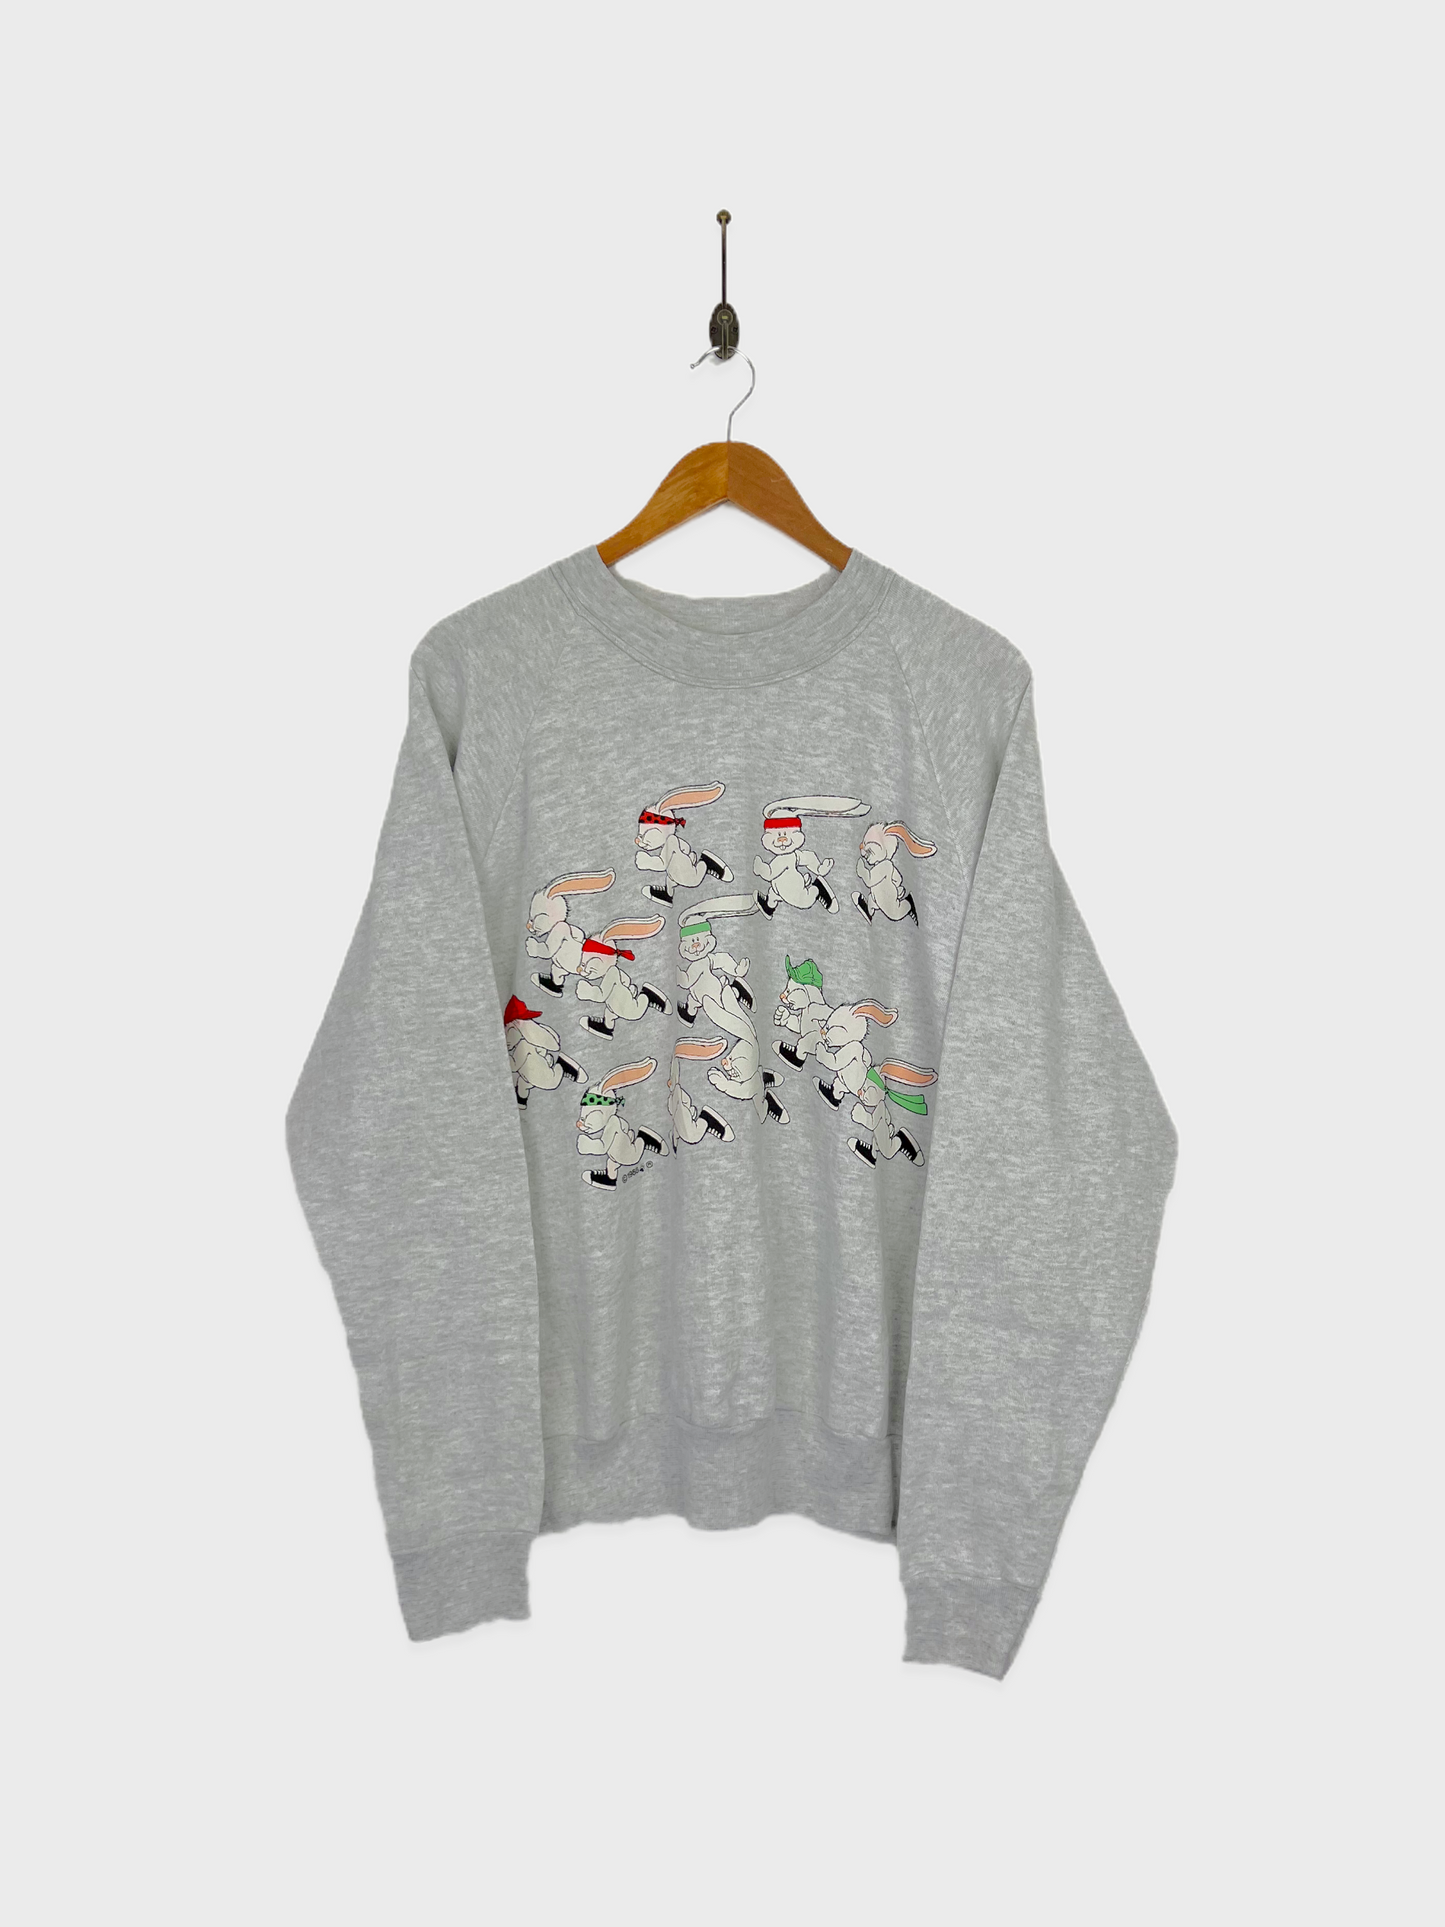 1988 USA Made Running Bunnies Graphic Vintage Sweatshirt Size M